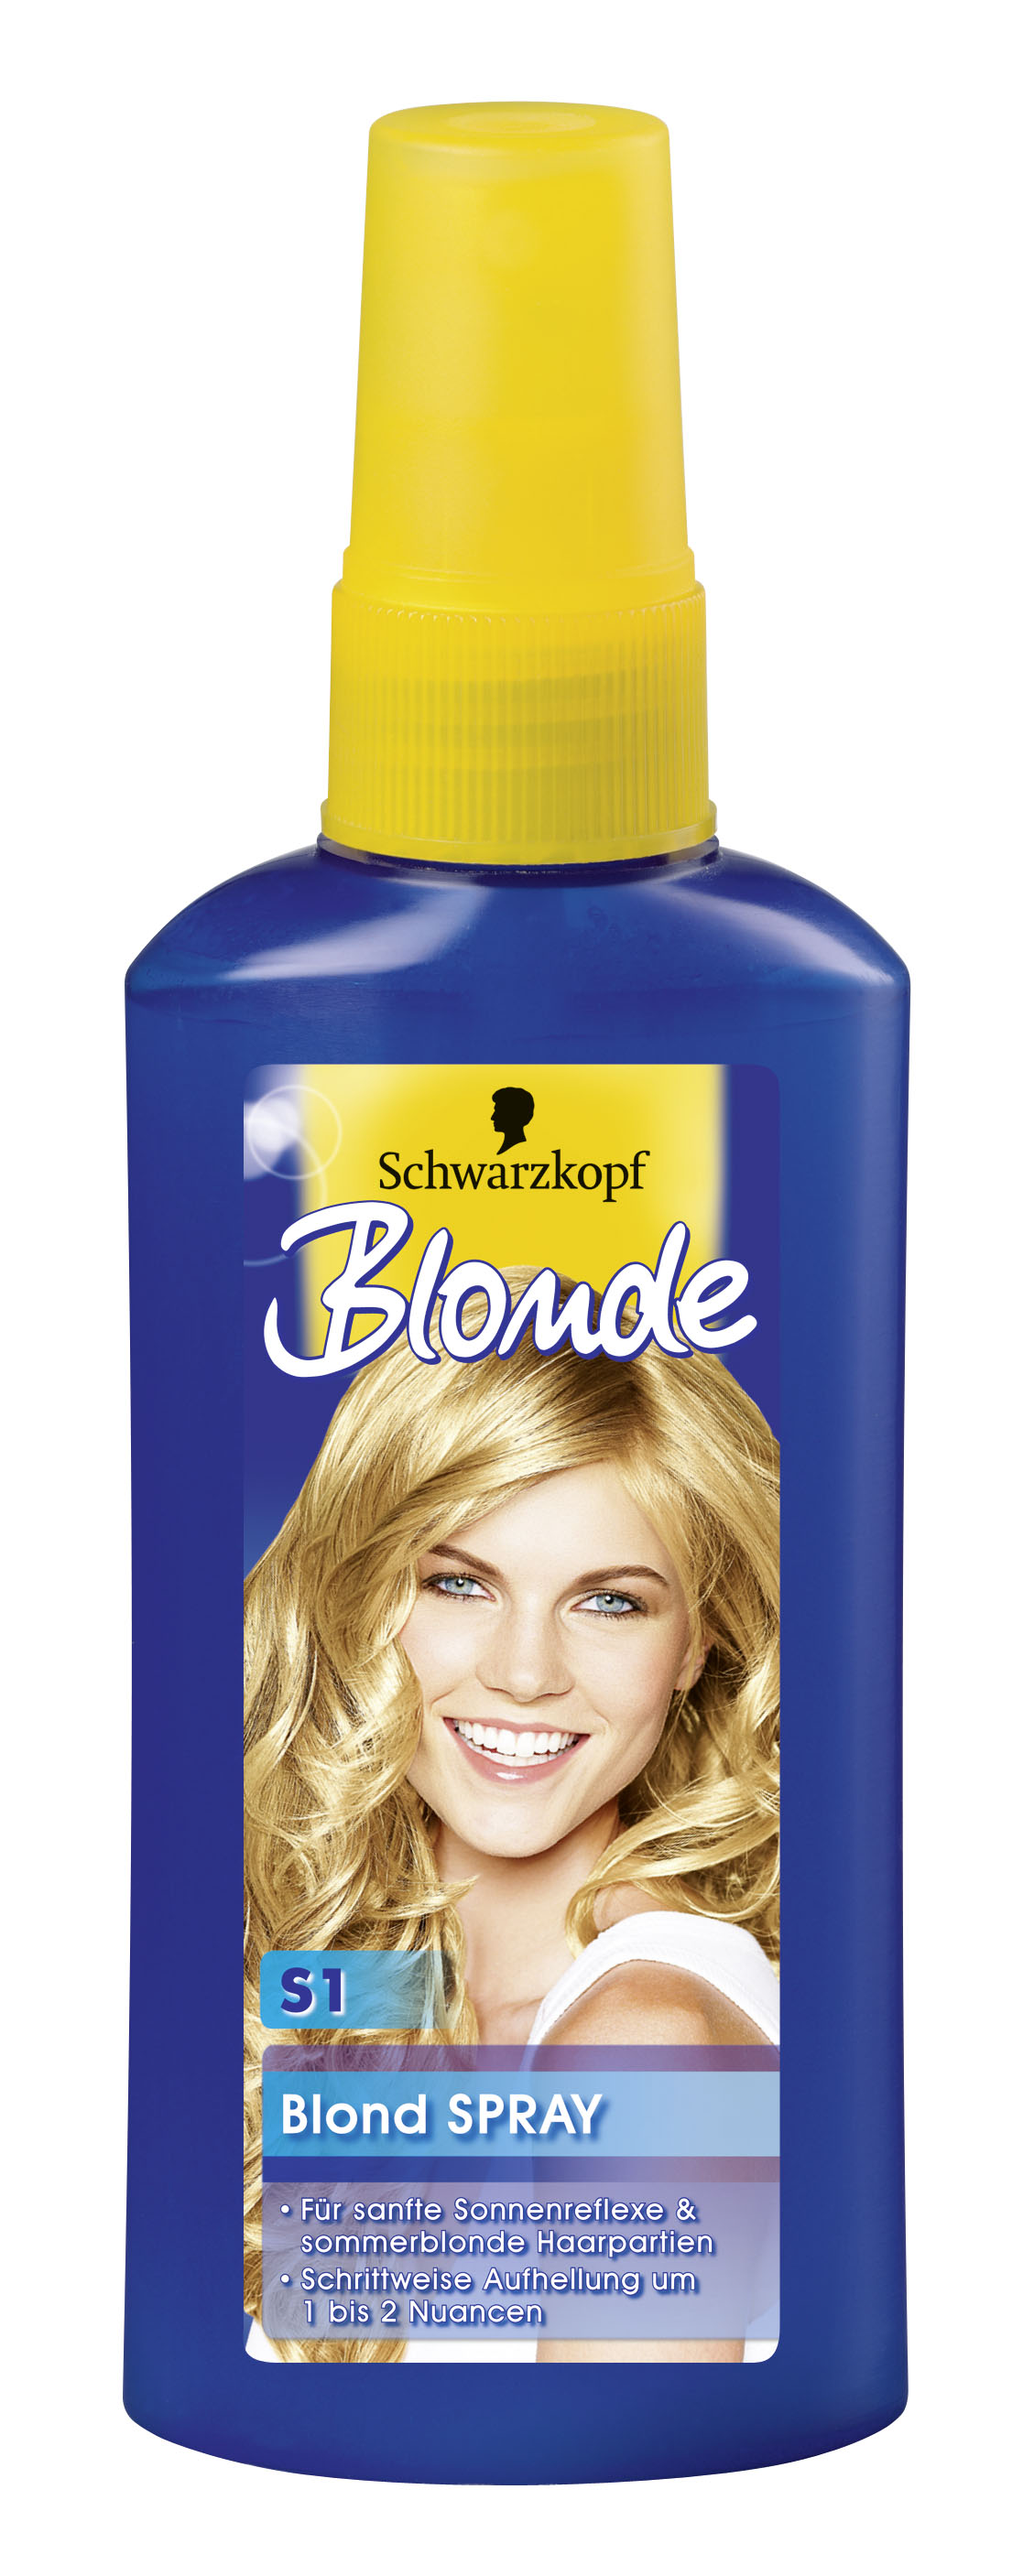 Blonde спрей. Schwarzkopf Nordic blonde спрей. Осветляющий спрей шварцкопф blonde. Осветляющий спрей для волос Schwarzkopf blonde. Осветляющий спрей Nordic.